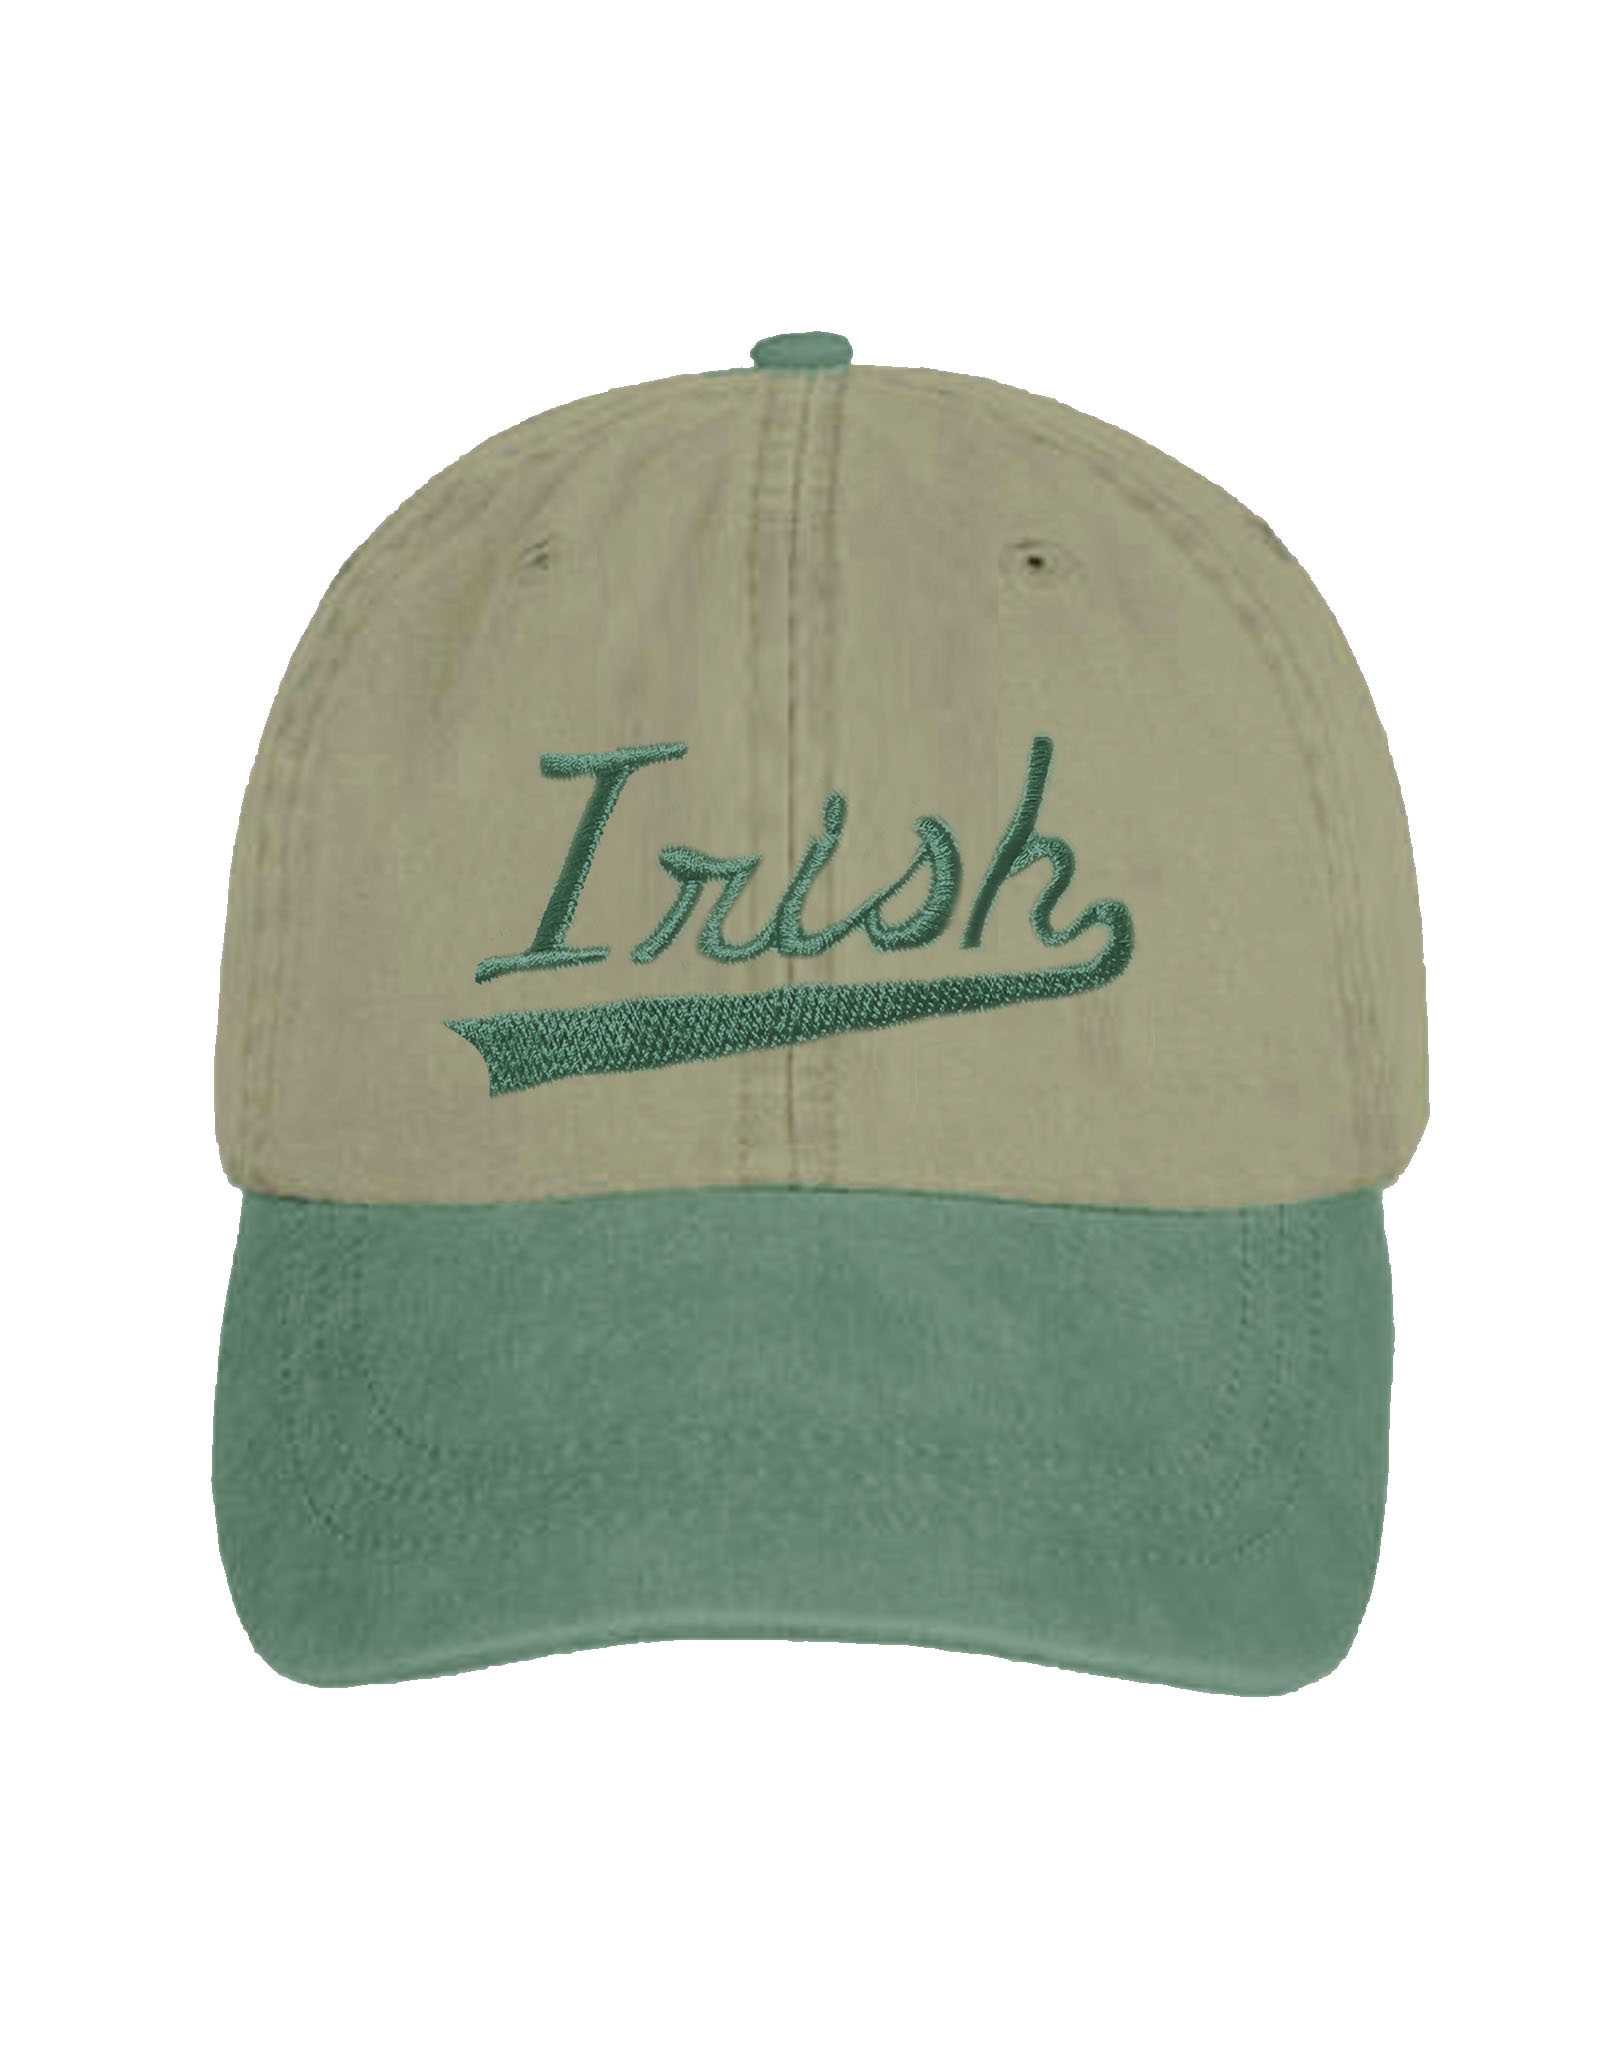 CAPS & HATS SEXTON IRISH BASEBALL CAP